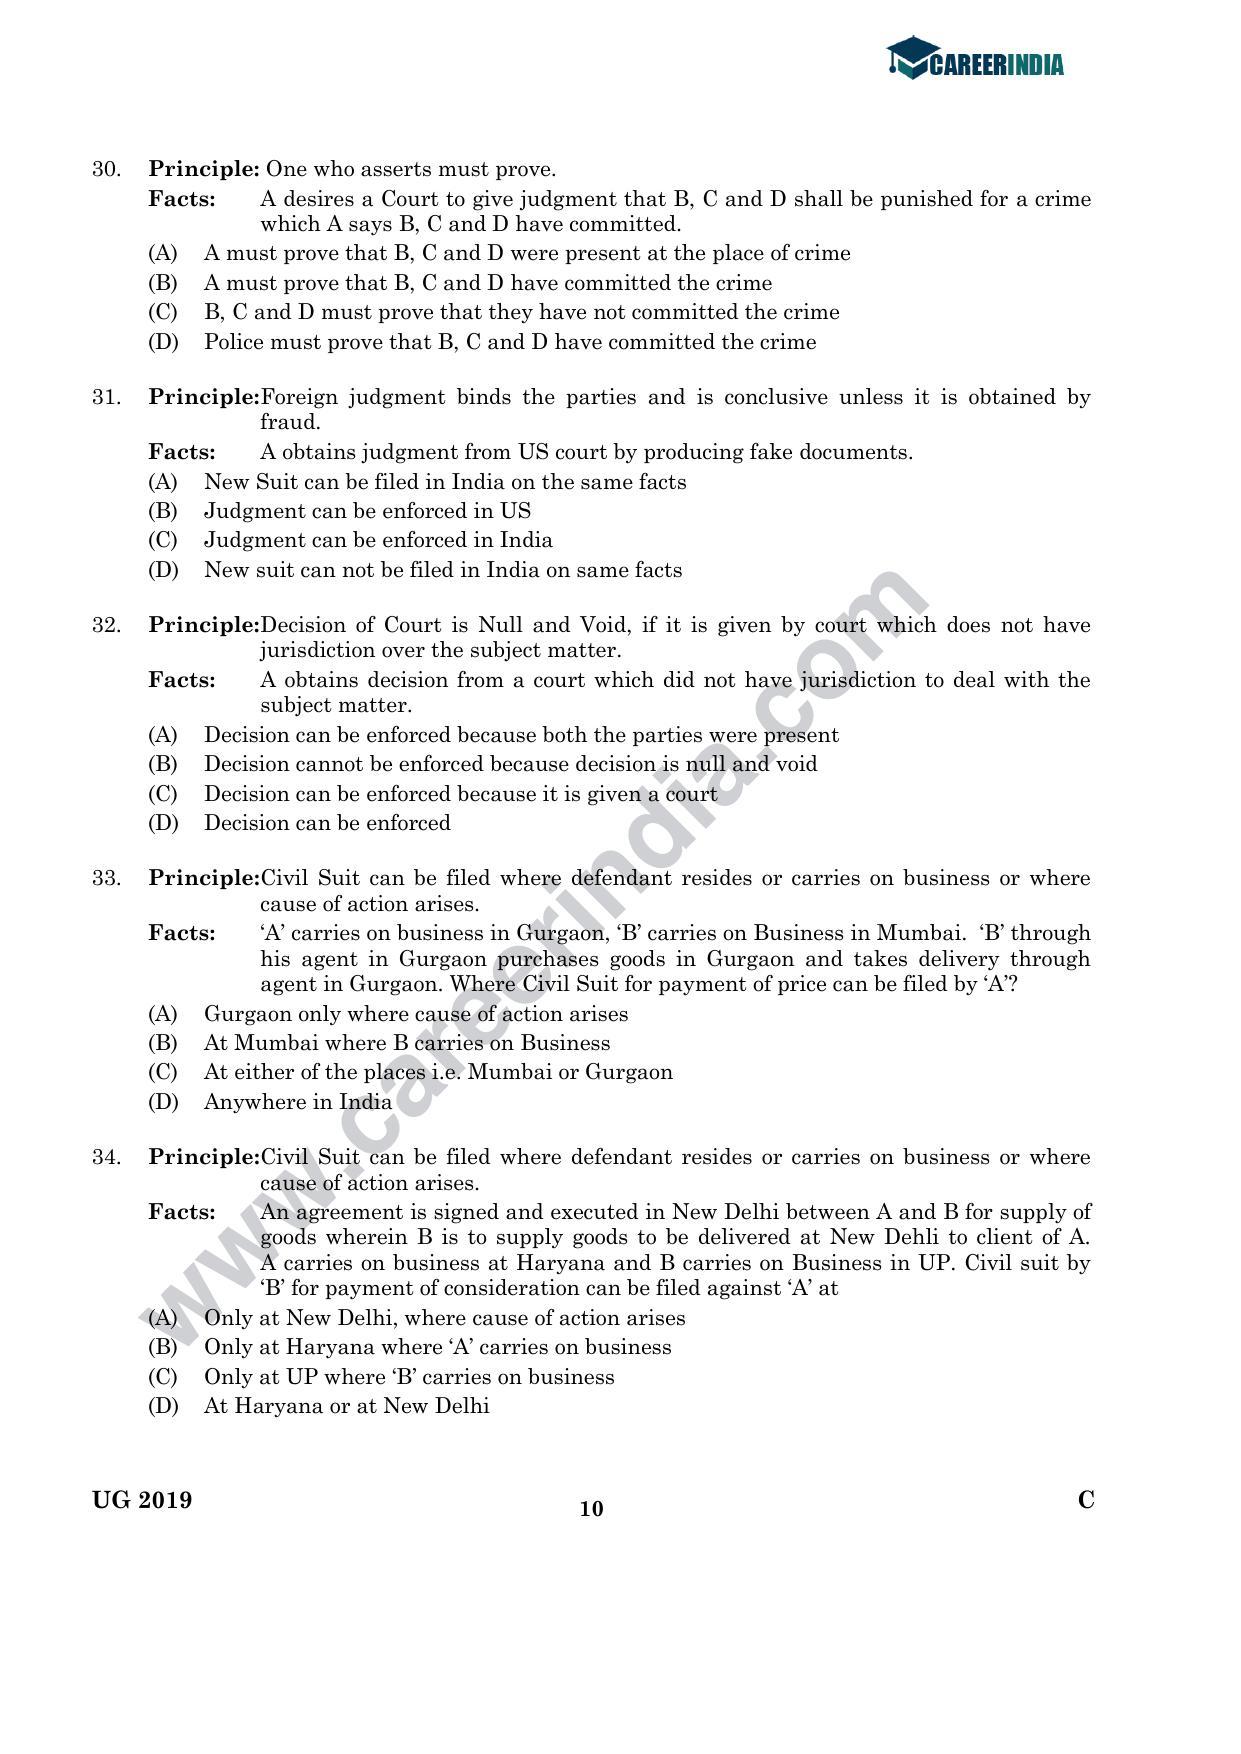 CLAT 2019 UG Legal-Aptitude Question Paper - Page 9